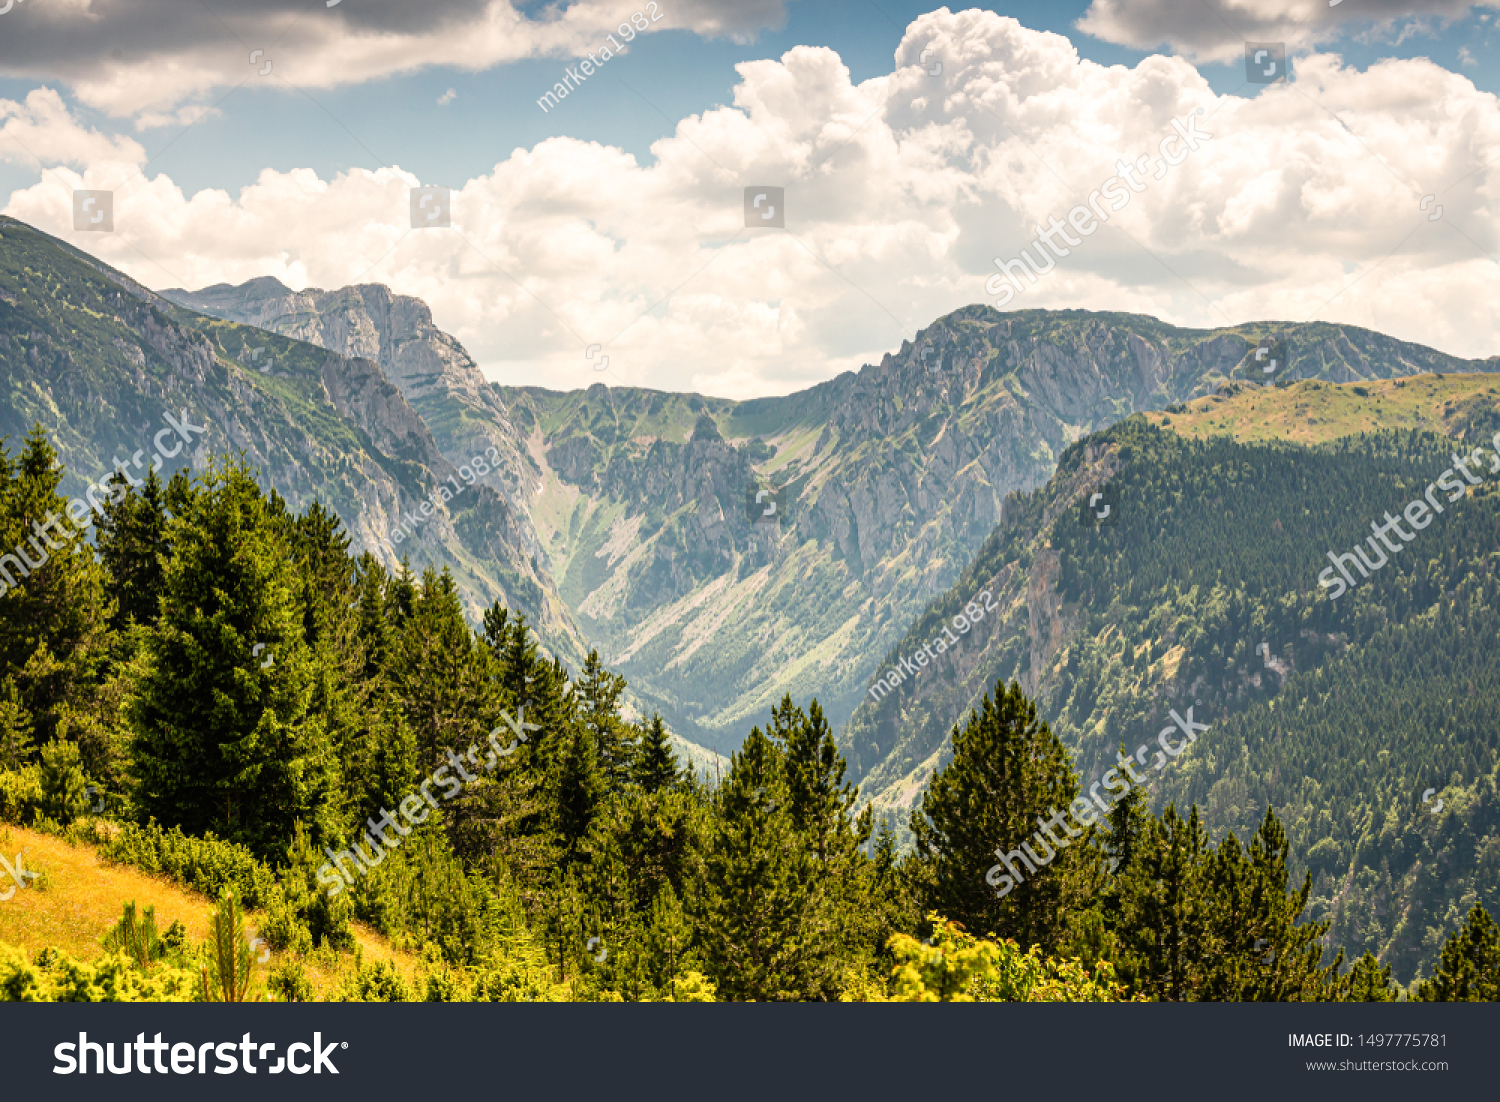 Shiny Emigrate Pure Mala Crna Gora Area National Park Stock Photo 1497775781 | Shutterstock